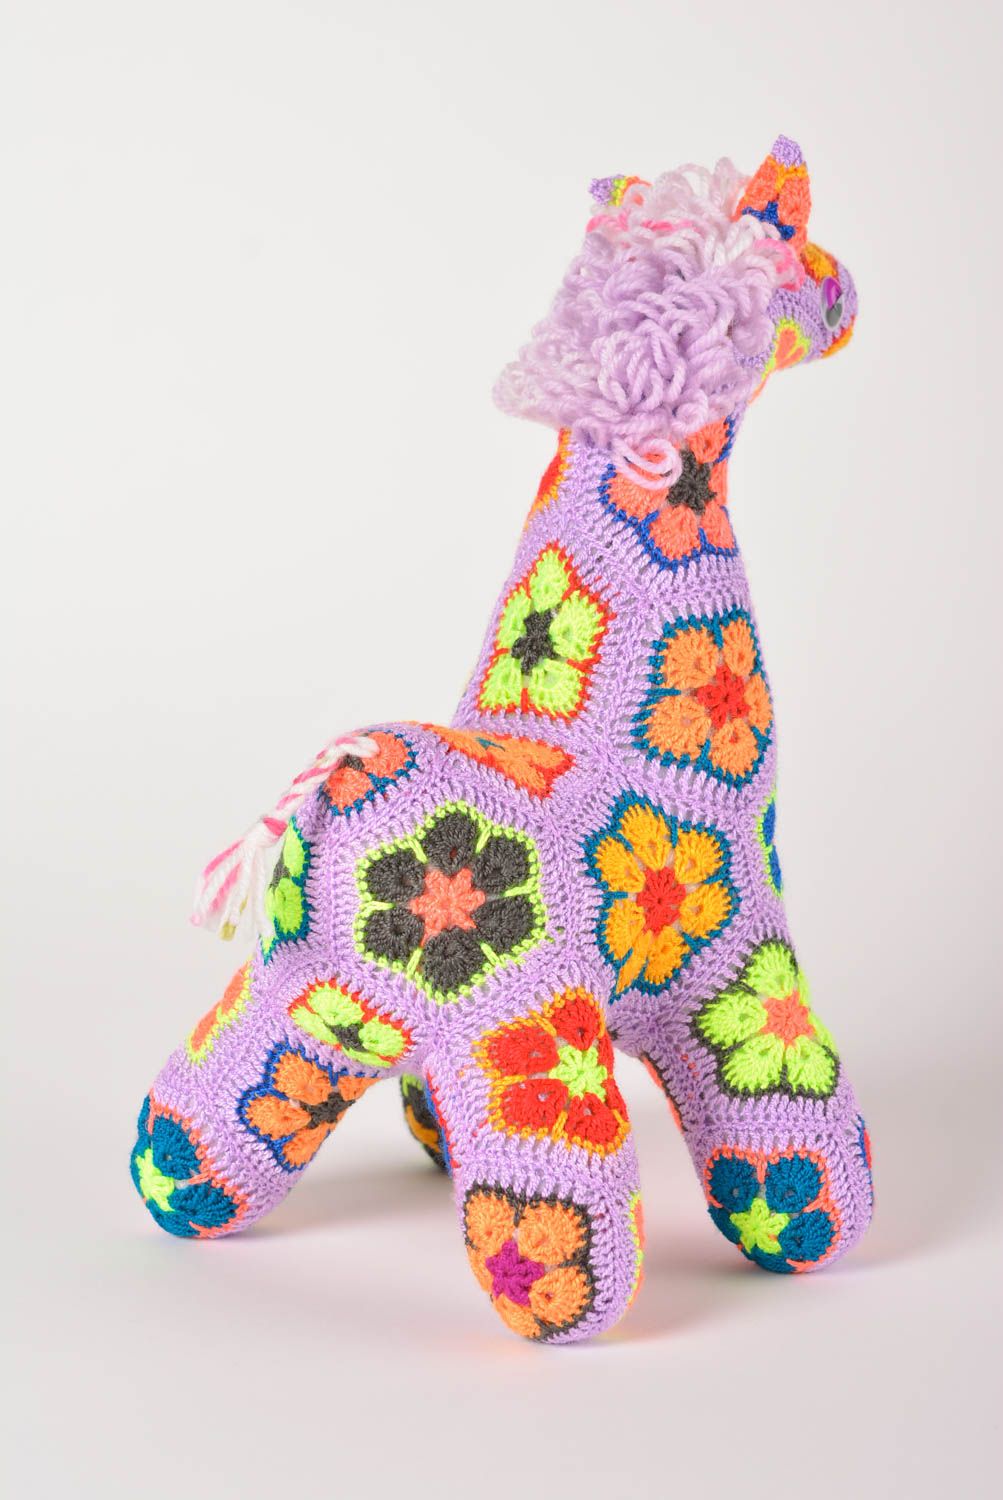 Unusual handmade crochet toy stuffed soft toy nursery design gifts for kids photo 3